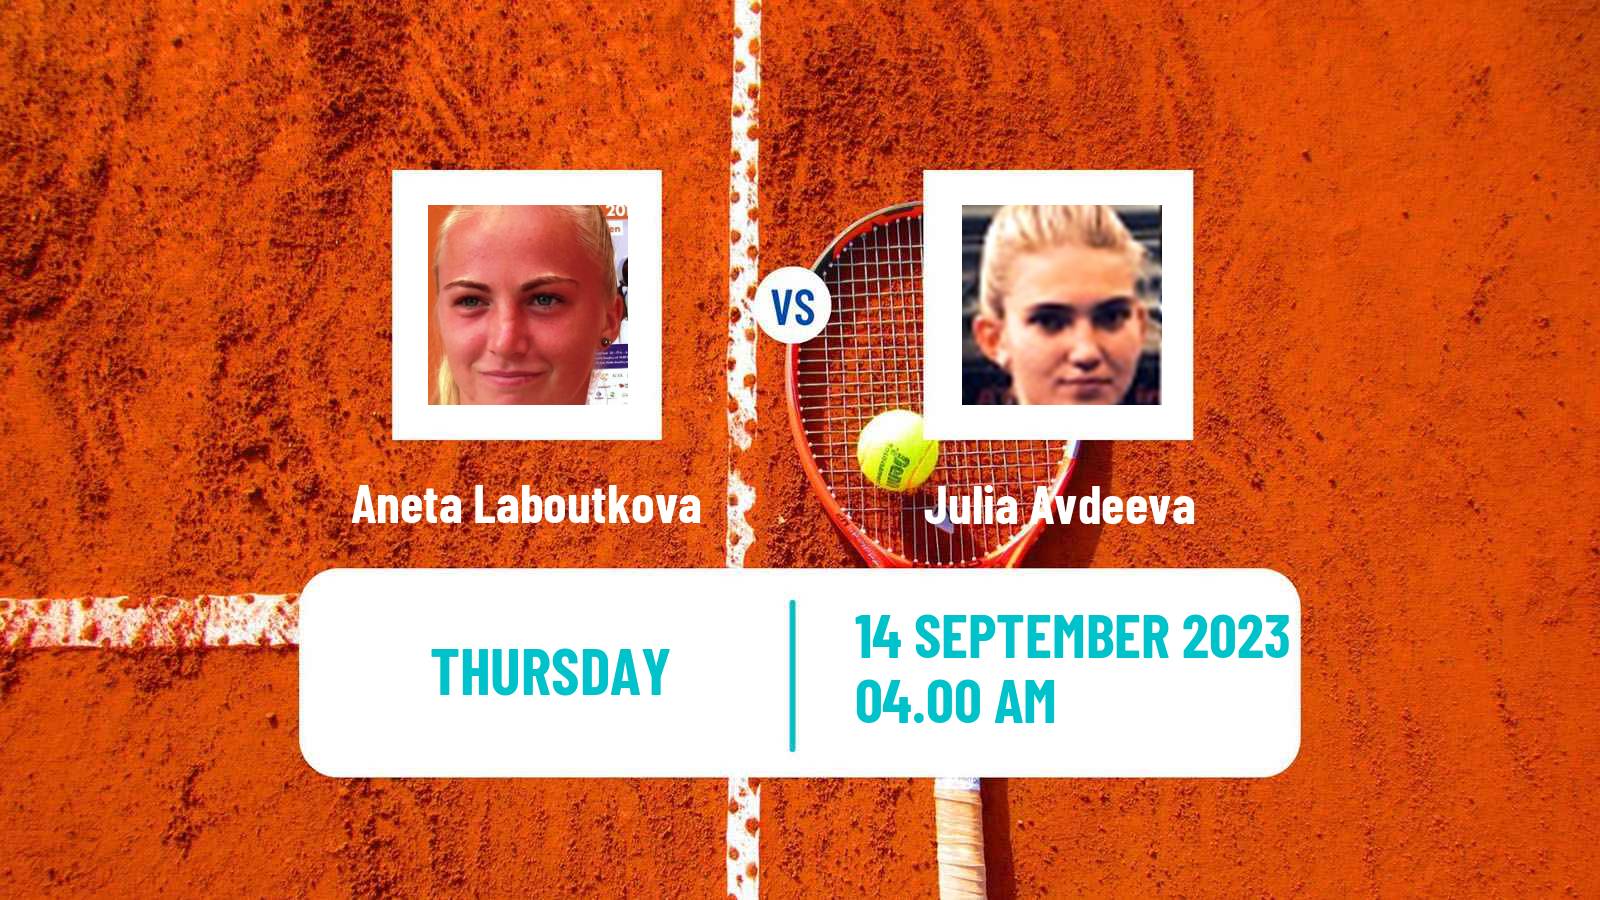 Tennis ITF W25 Varna Women Aneta Laboutkova - Julia Avdeeva